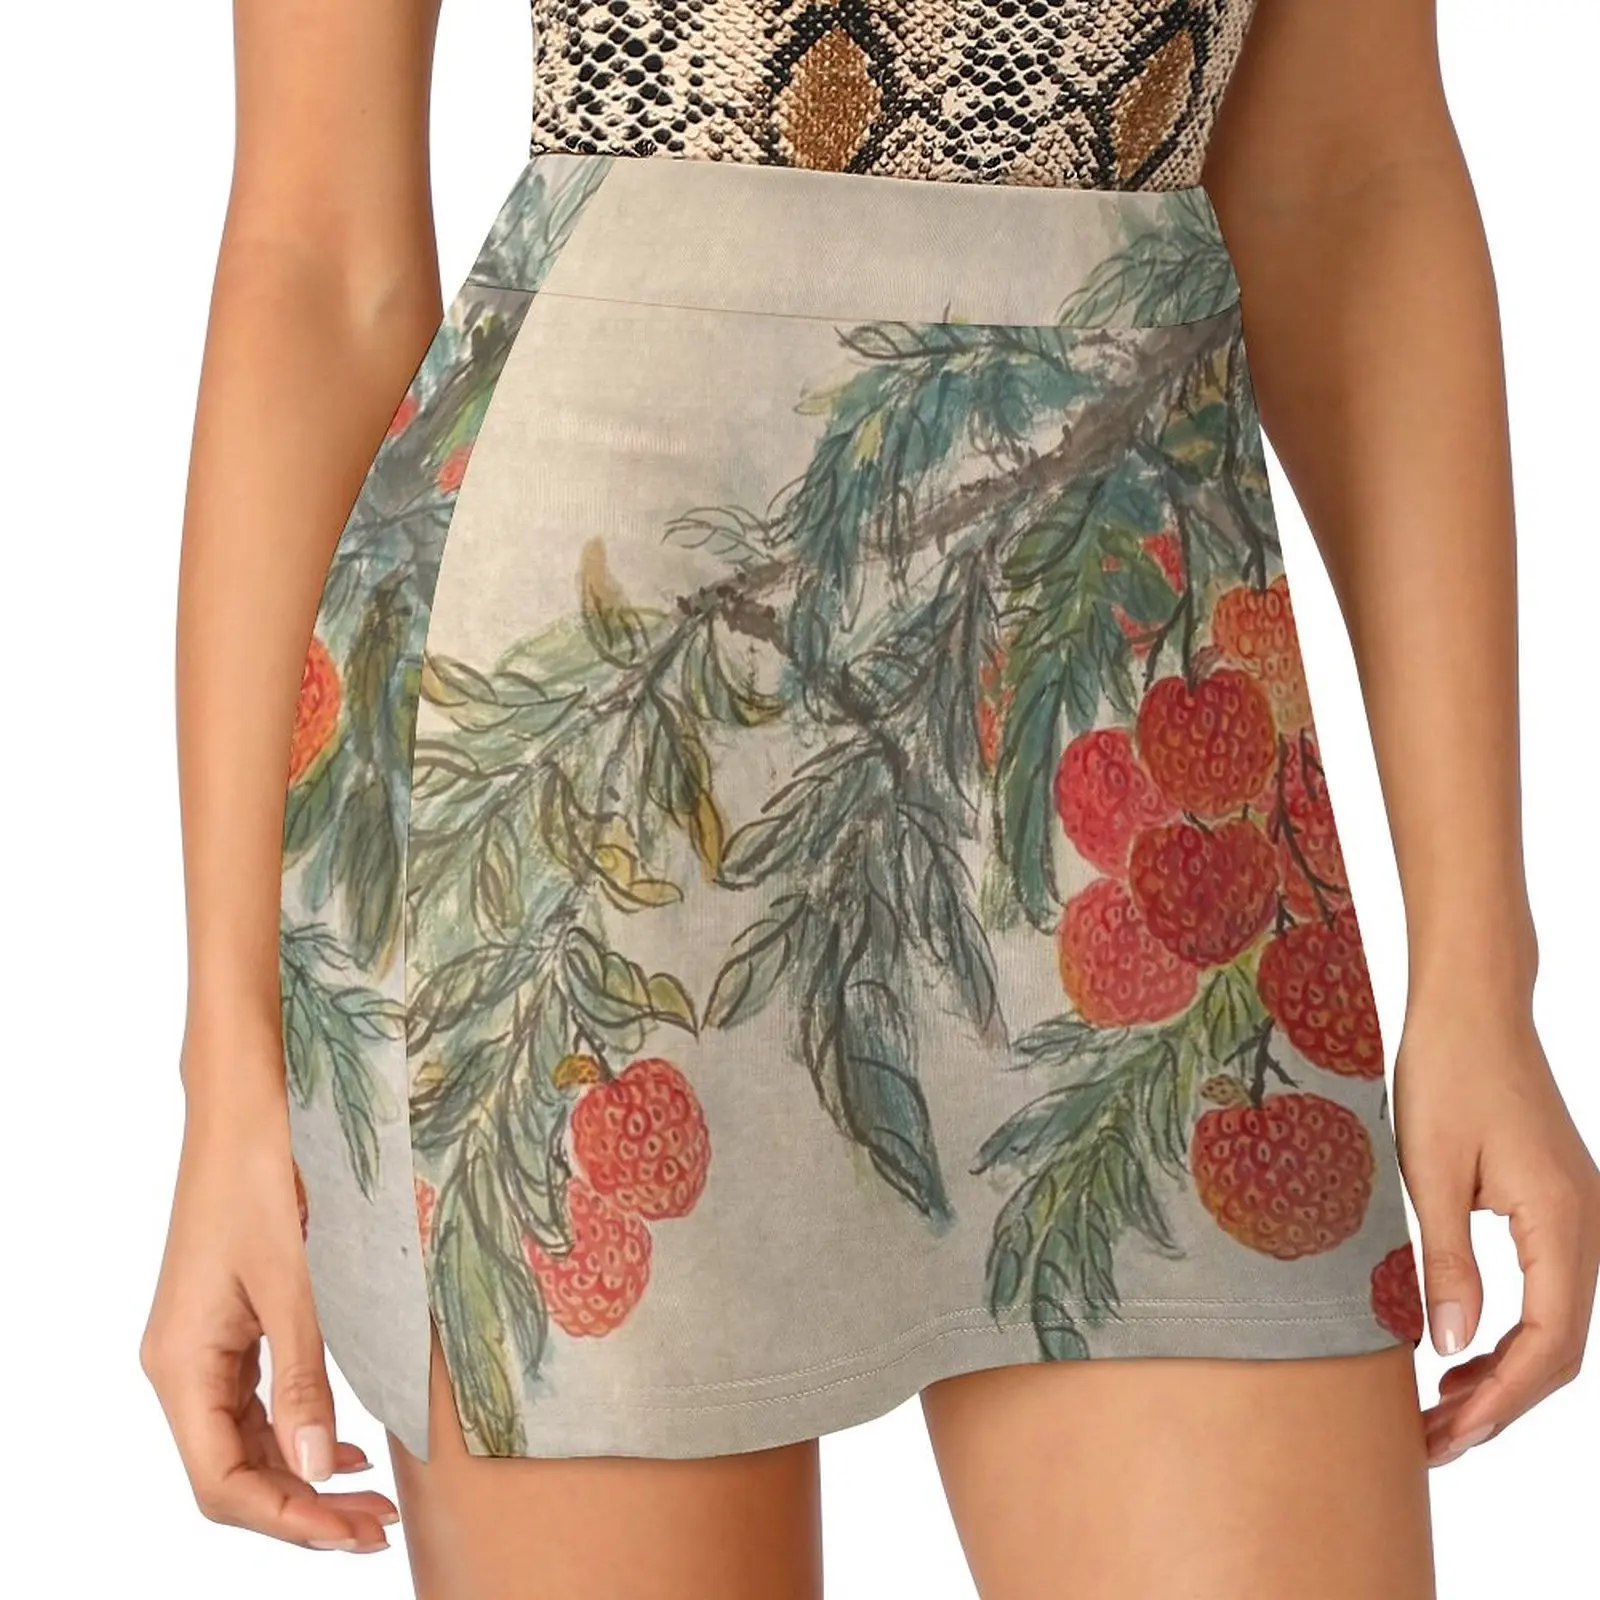 

Seductive Lychee Light proof trouser skirt Women's summer dress dresses for prom night club outfit Skirt pants